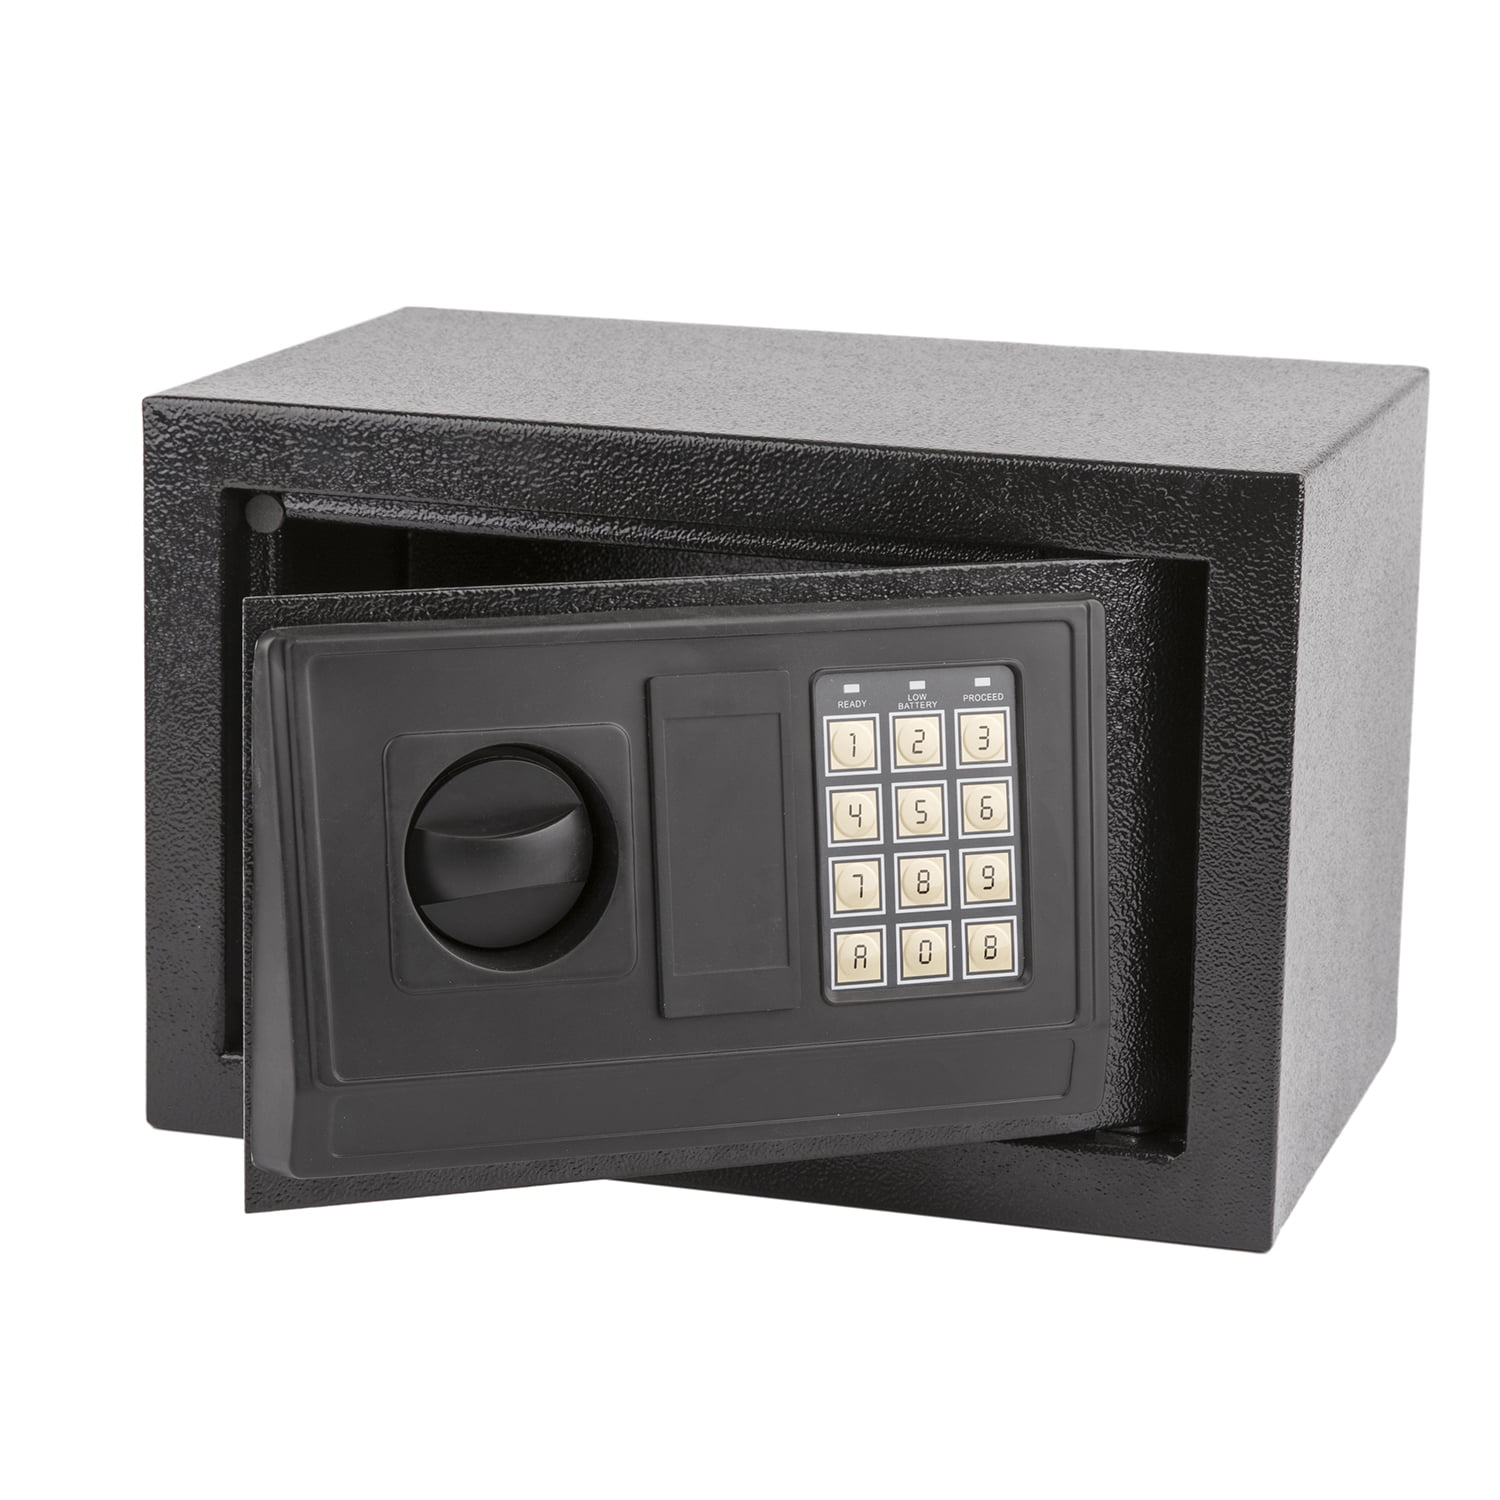 Digital Money Bank Safe Strongbox Coin box Black DIGITAL SAFE STRONGBOX BLACK 